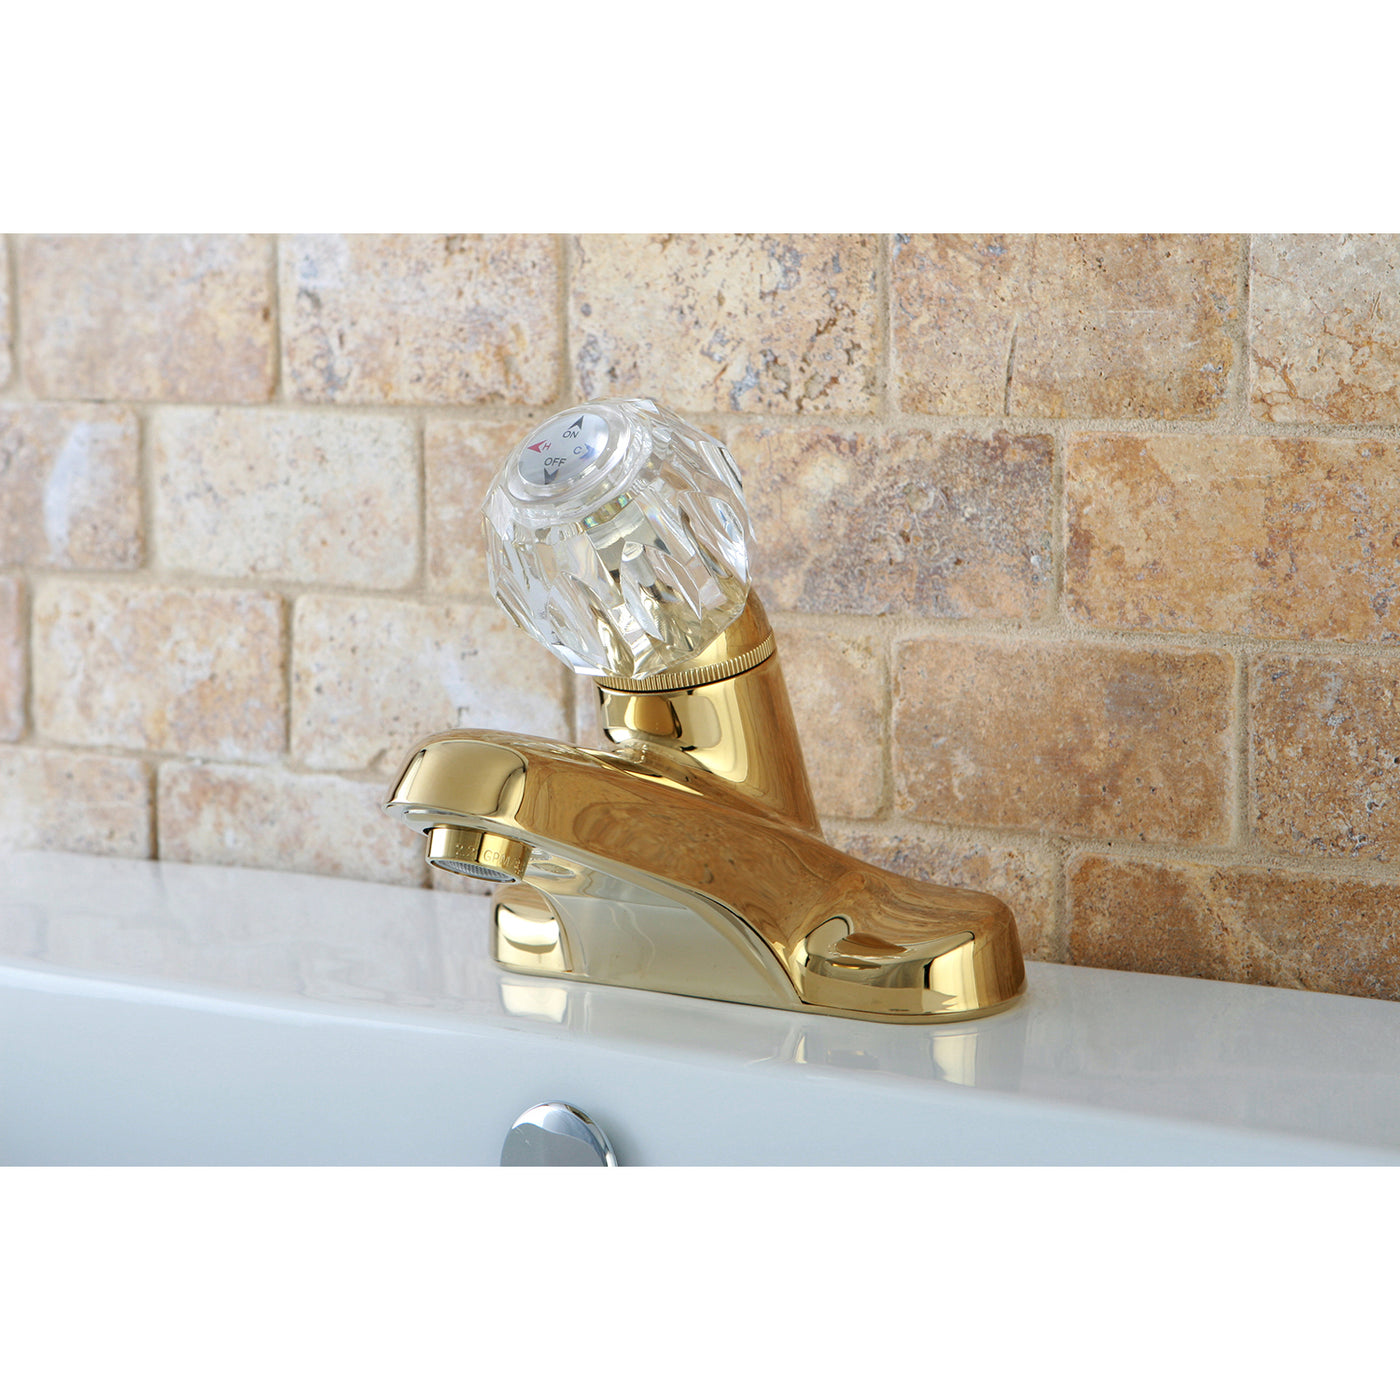 Elements of Design EB522LP Single-Handle 4-Inch Centerset Bathroom Faucet, Polished Brass